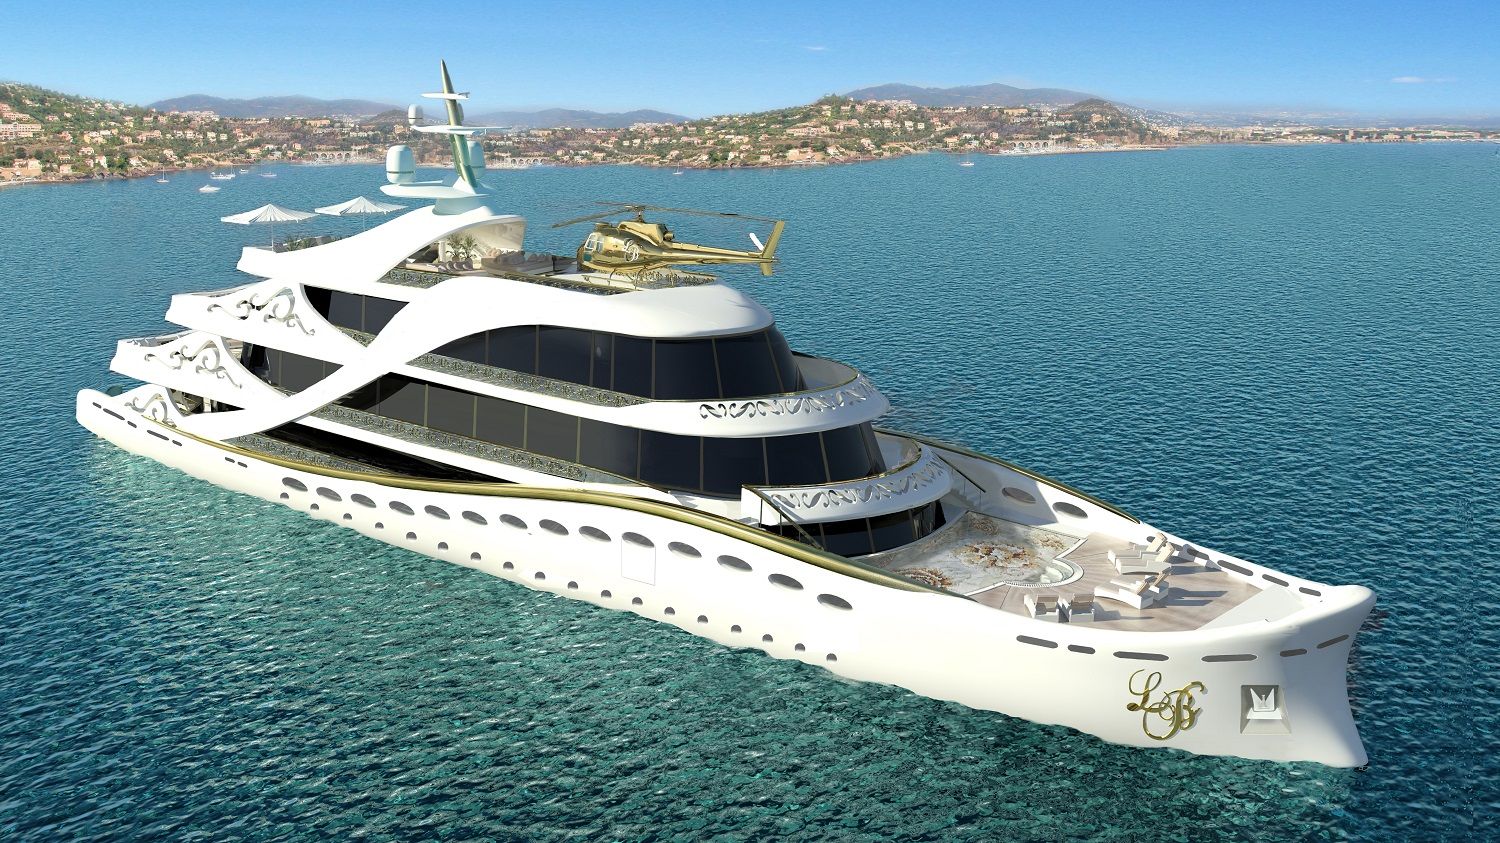 Lidia Bersani Luxury Design ,La Belle, yacht